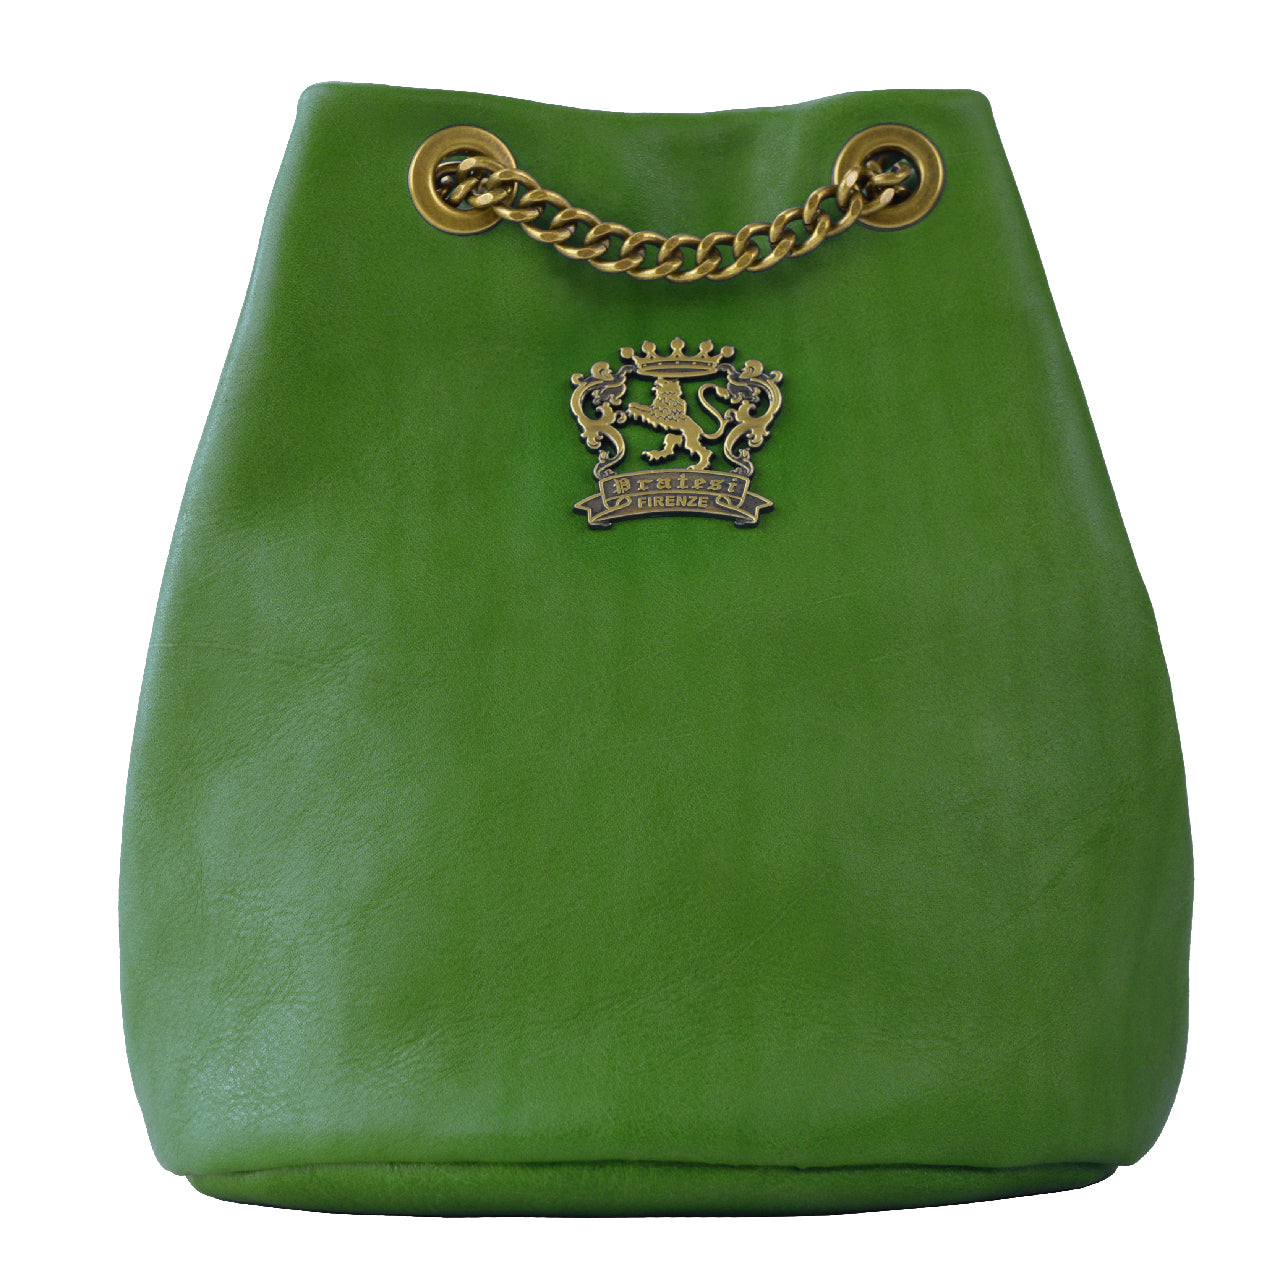 Pratesi Pienza Bag in genuine Italian leather - Vegetable Tanned Italian Leather Emerald